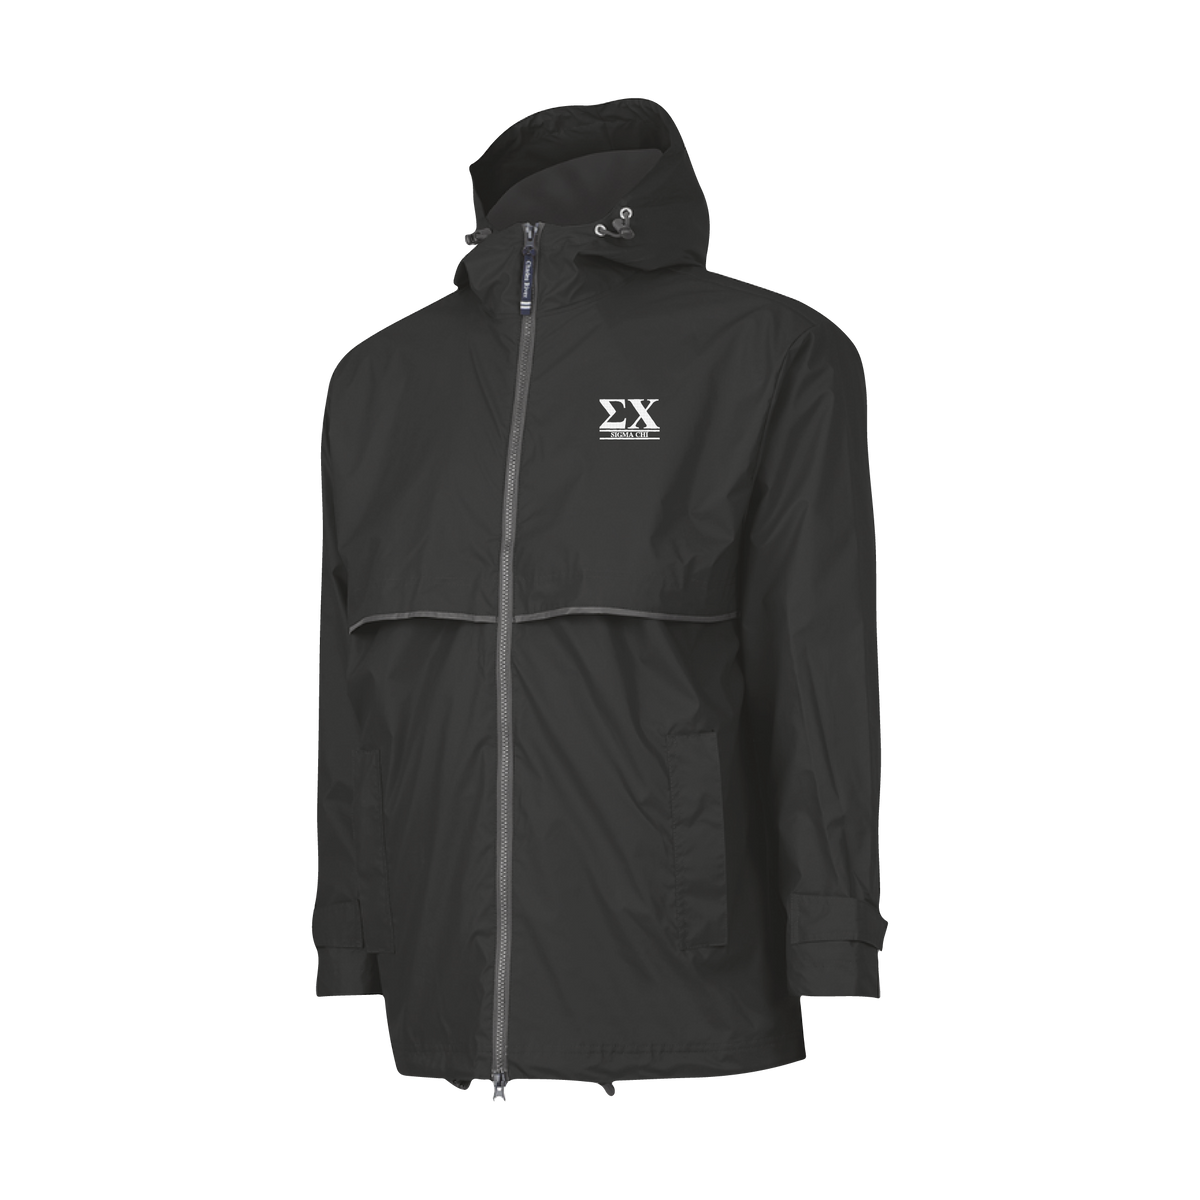 B-Unlimited Greek - Rain Jacket (SIGMA CHI) - Charles River - 9199 - New Englander Rain Jacket - Black